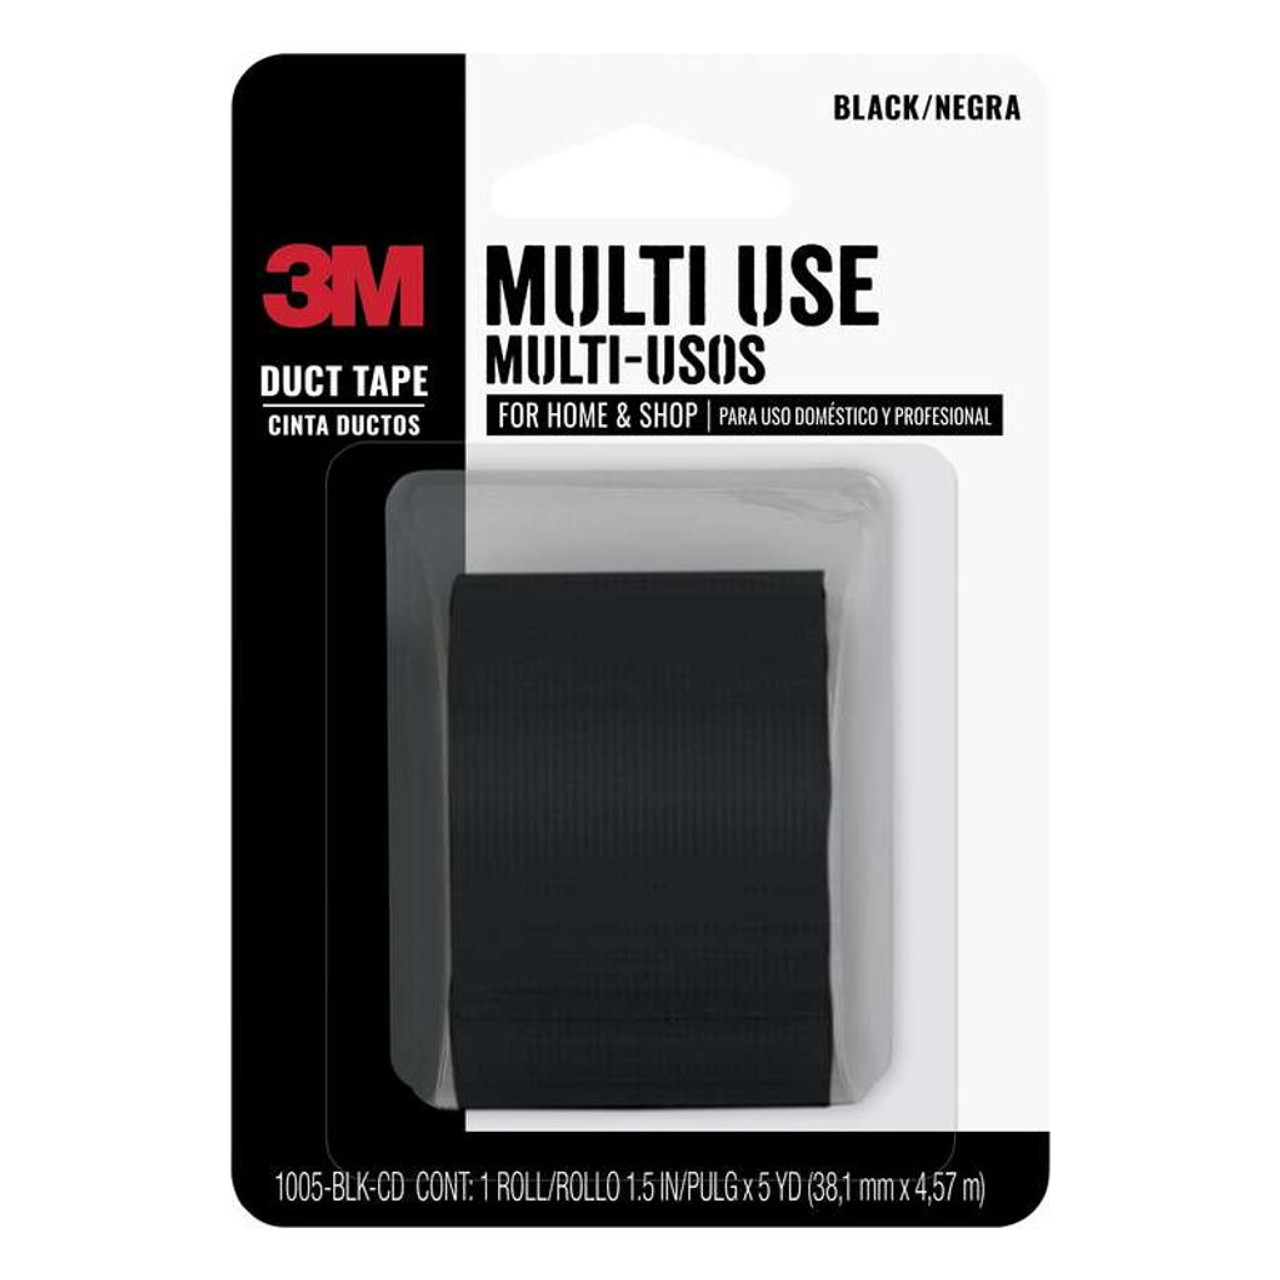 3M 1.88 in. x 20 yds. Black Duct Tape (Case of 12) 3920-BK